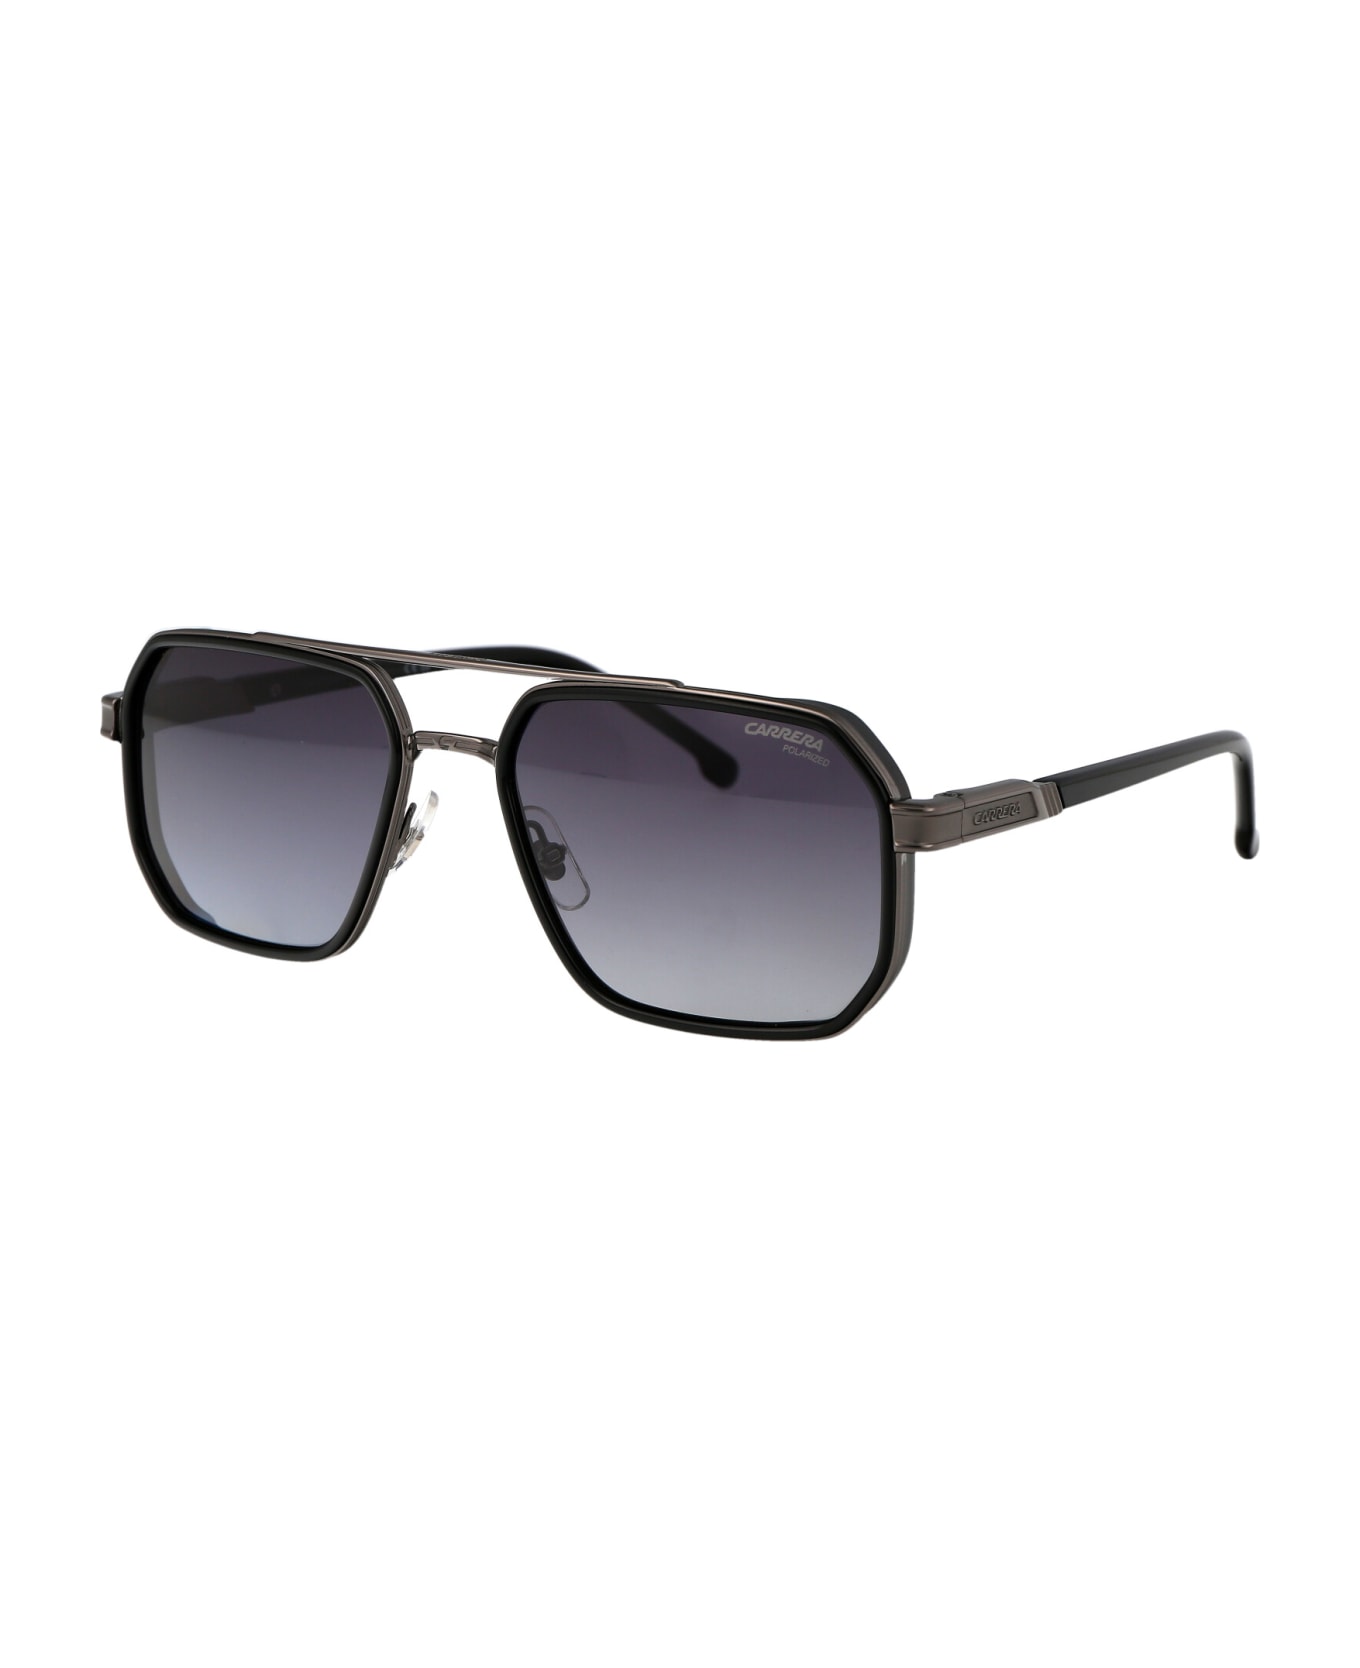 Carrera 1069/s Sunglasses - ANSWJ BLK DKRUT サングラス